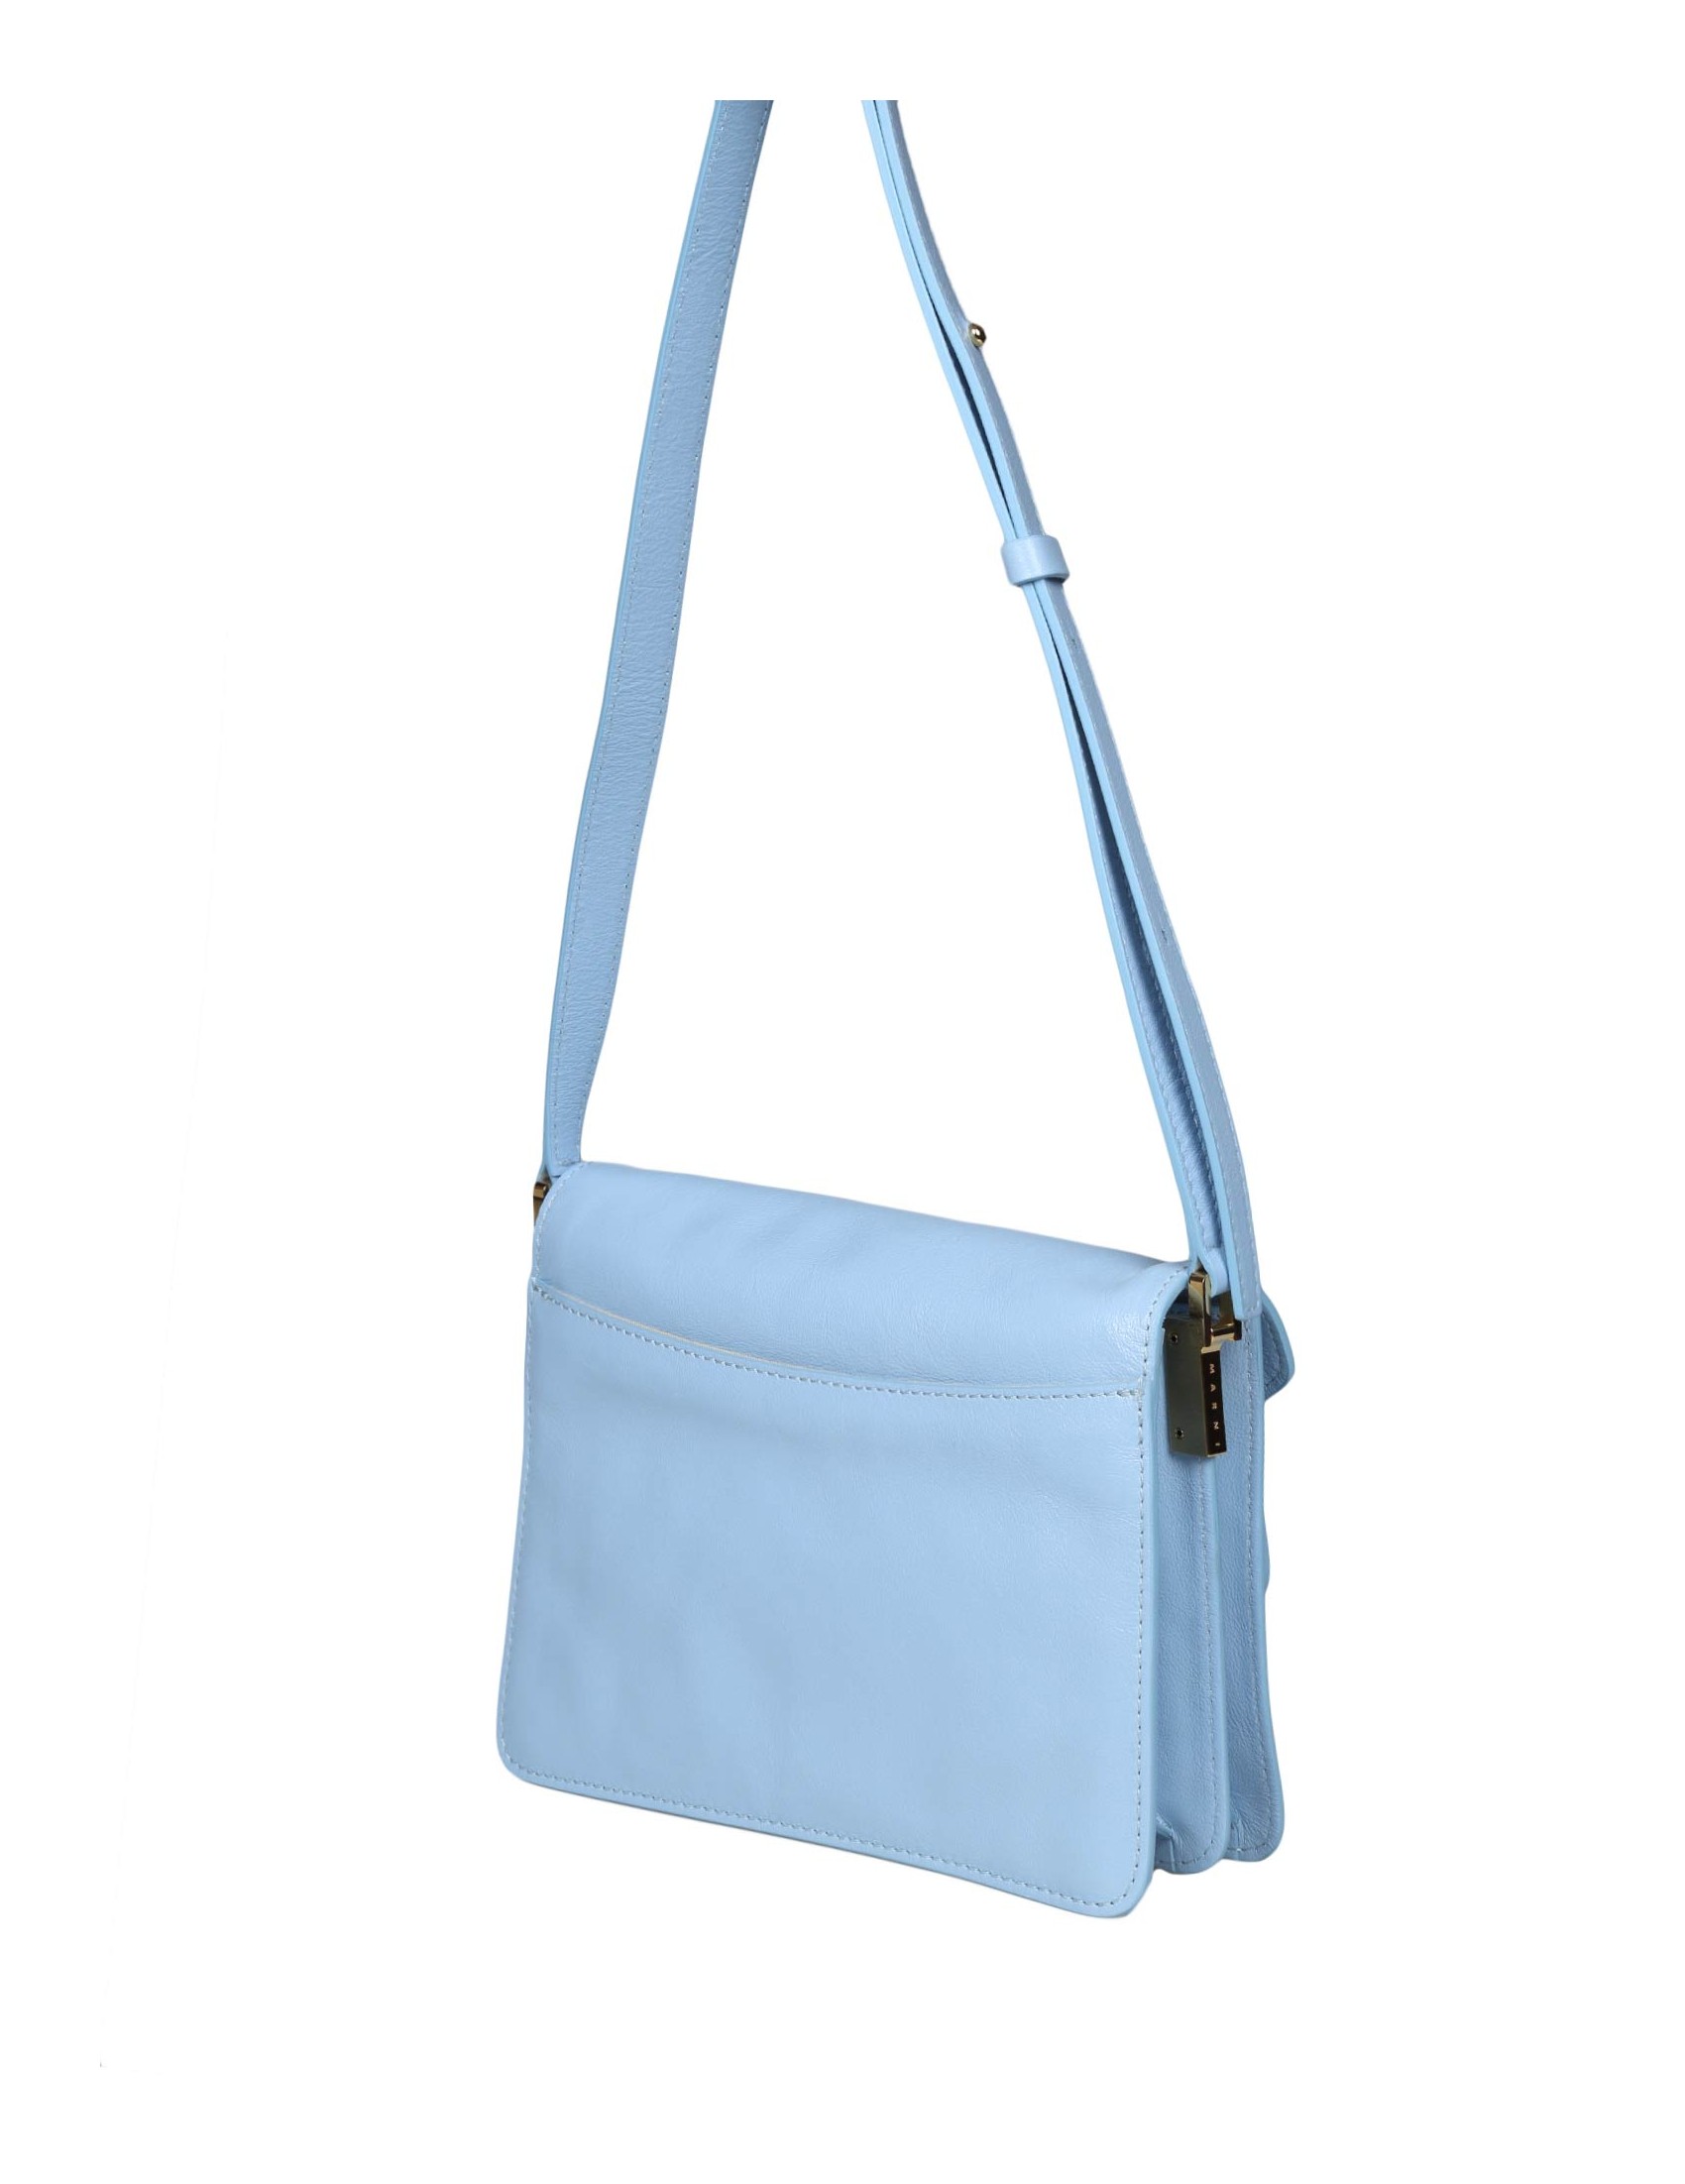 Marni Trunk - Shoulder bag for Woman - Light Blue - SBMPN09U07LV520Z602B